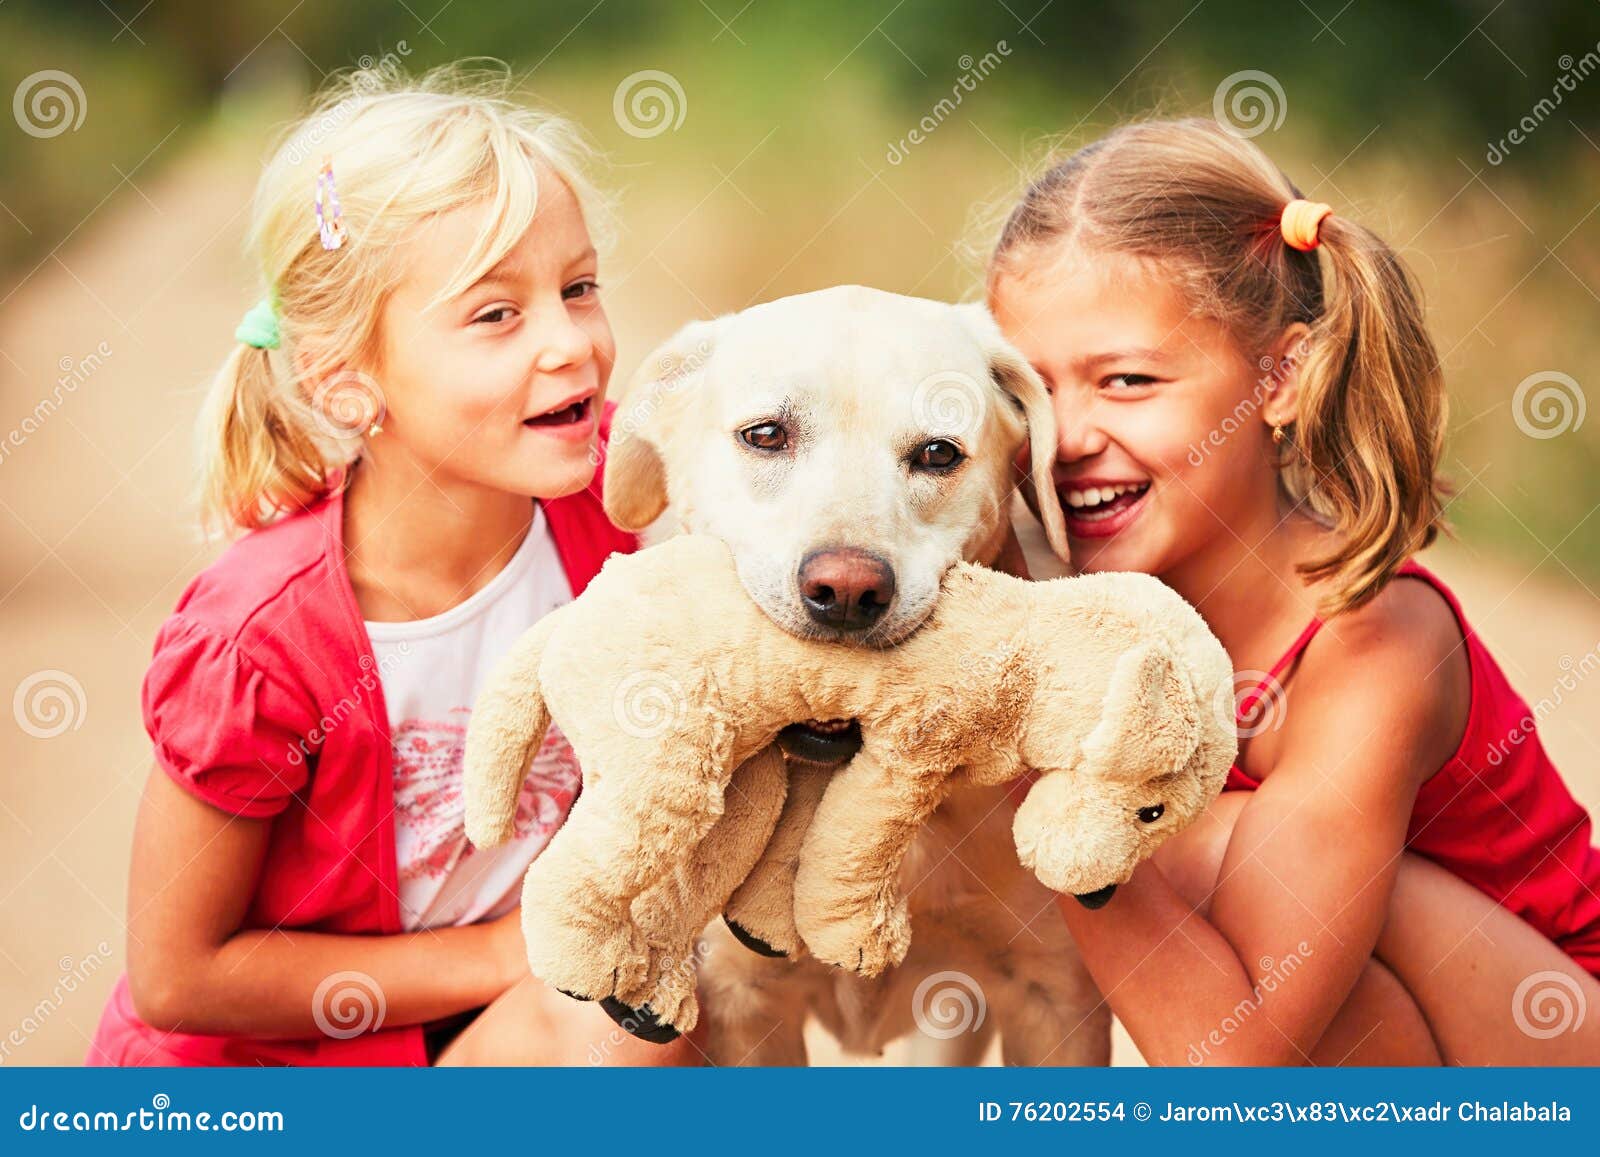 Girl two dog. Две девочки и собака. Две девочки радостные с собакой. Сестра собака. Две сестры с собакой.